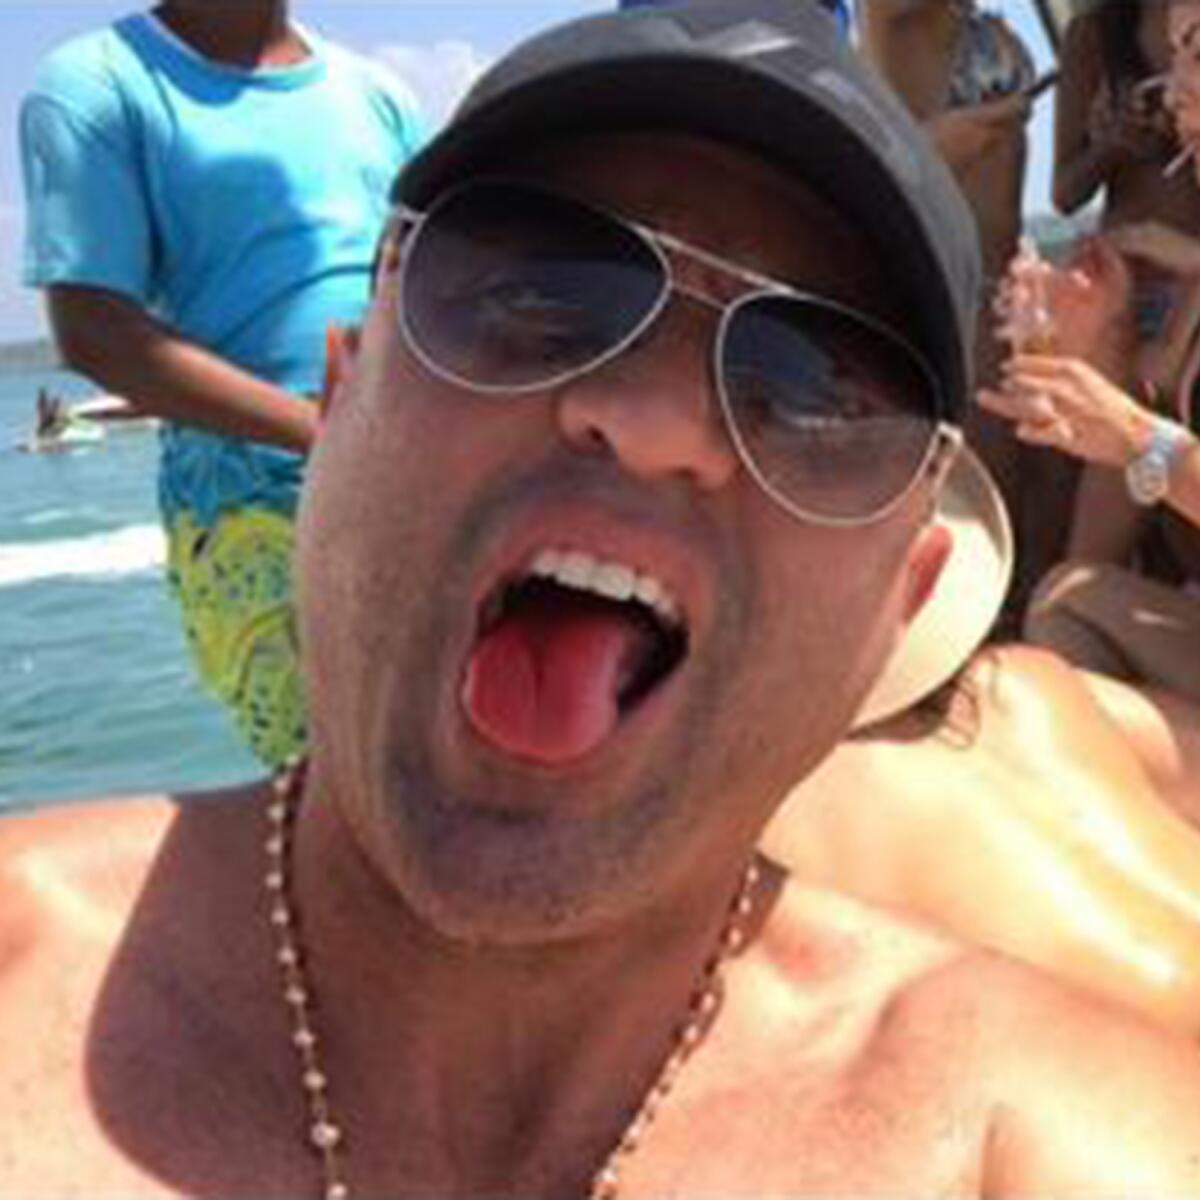 A man wearing sunglasses sticks his tongue out at the camera.